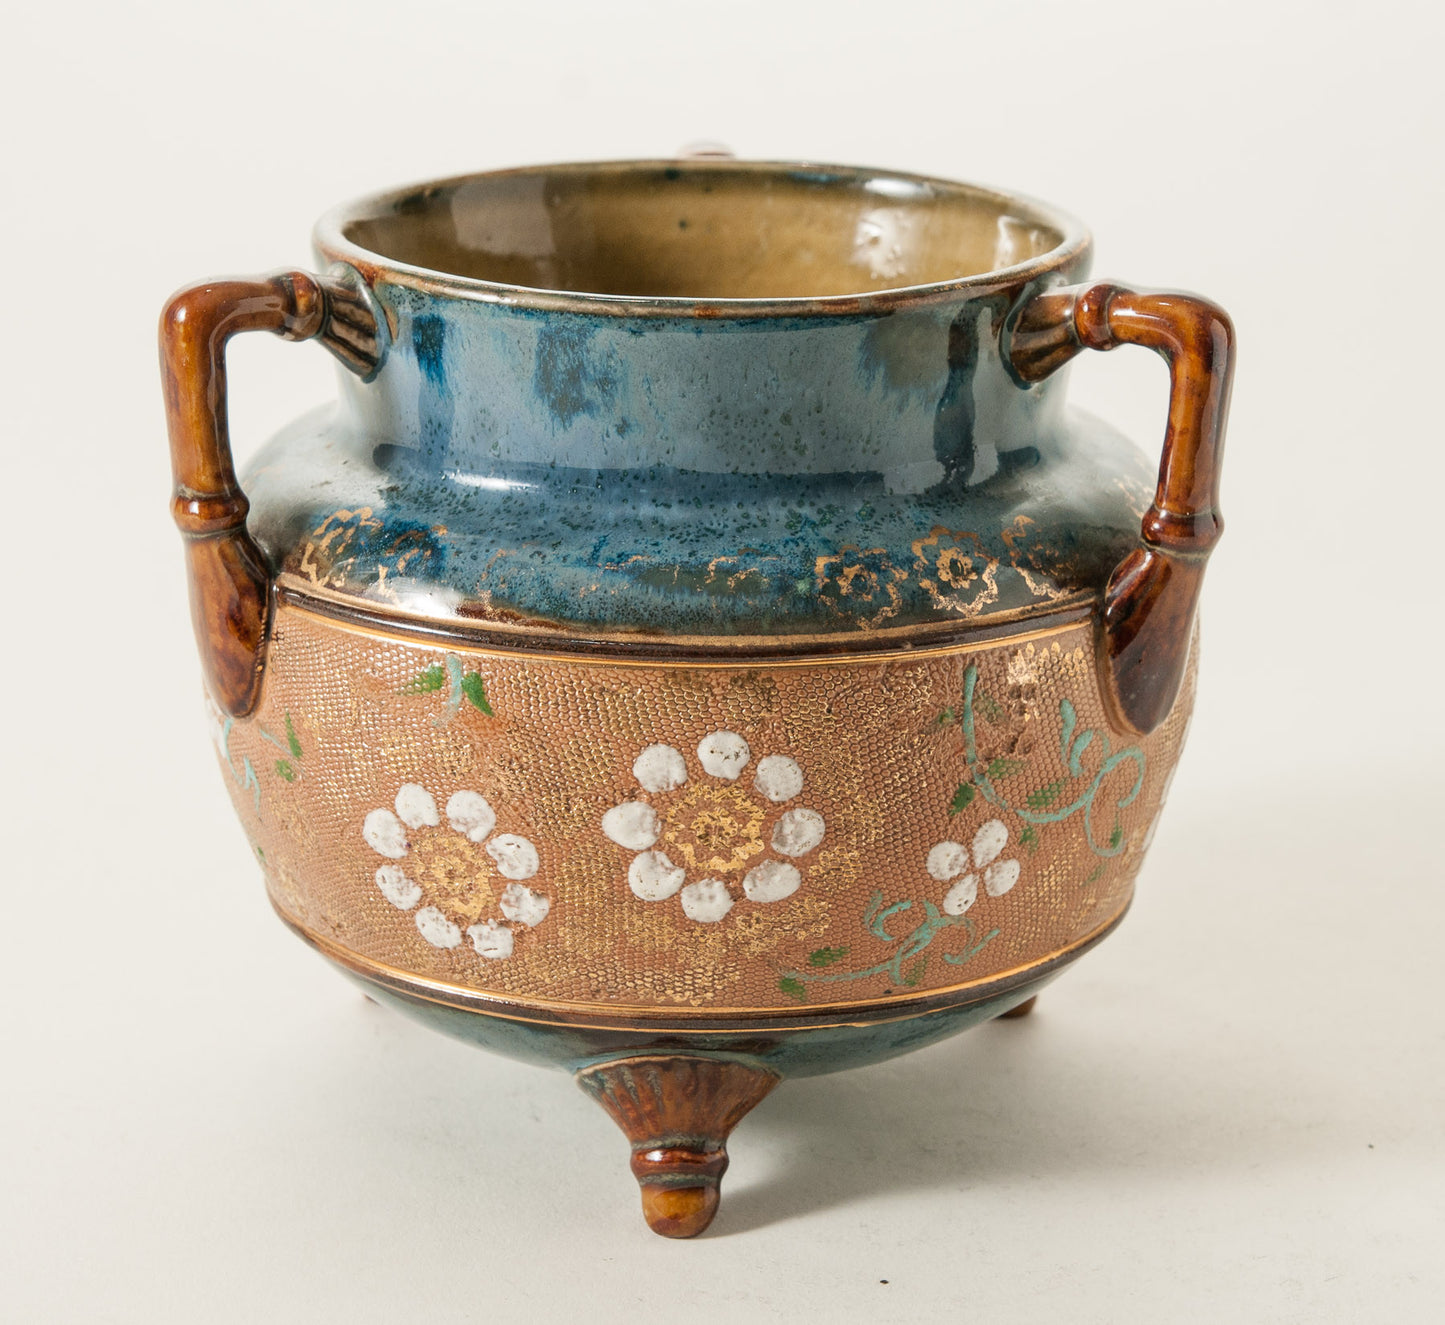 Antique Doulton Lambeth Stoneware Slaters Patent Tri Foot Vase or Planter c1910 (Code 0537)